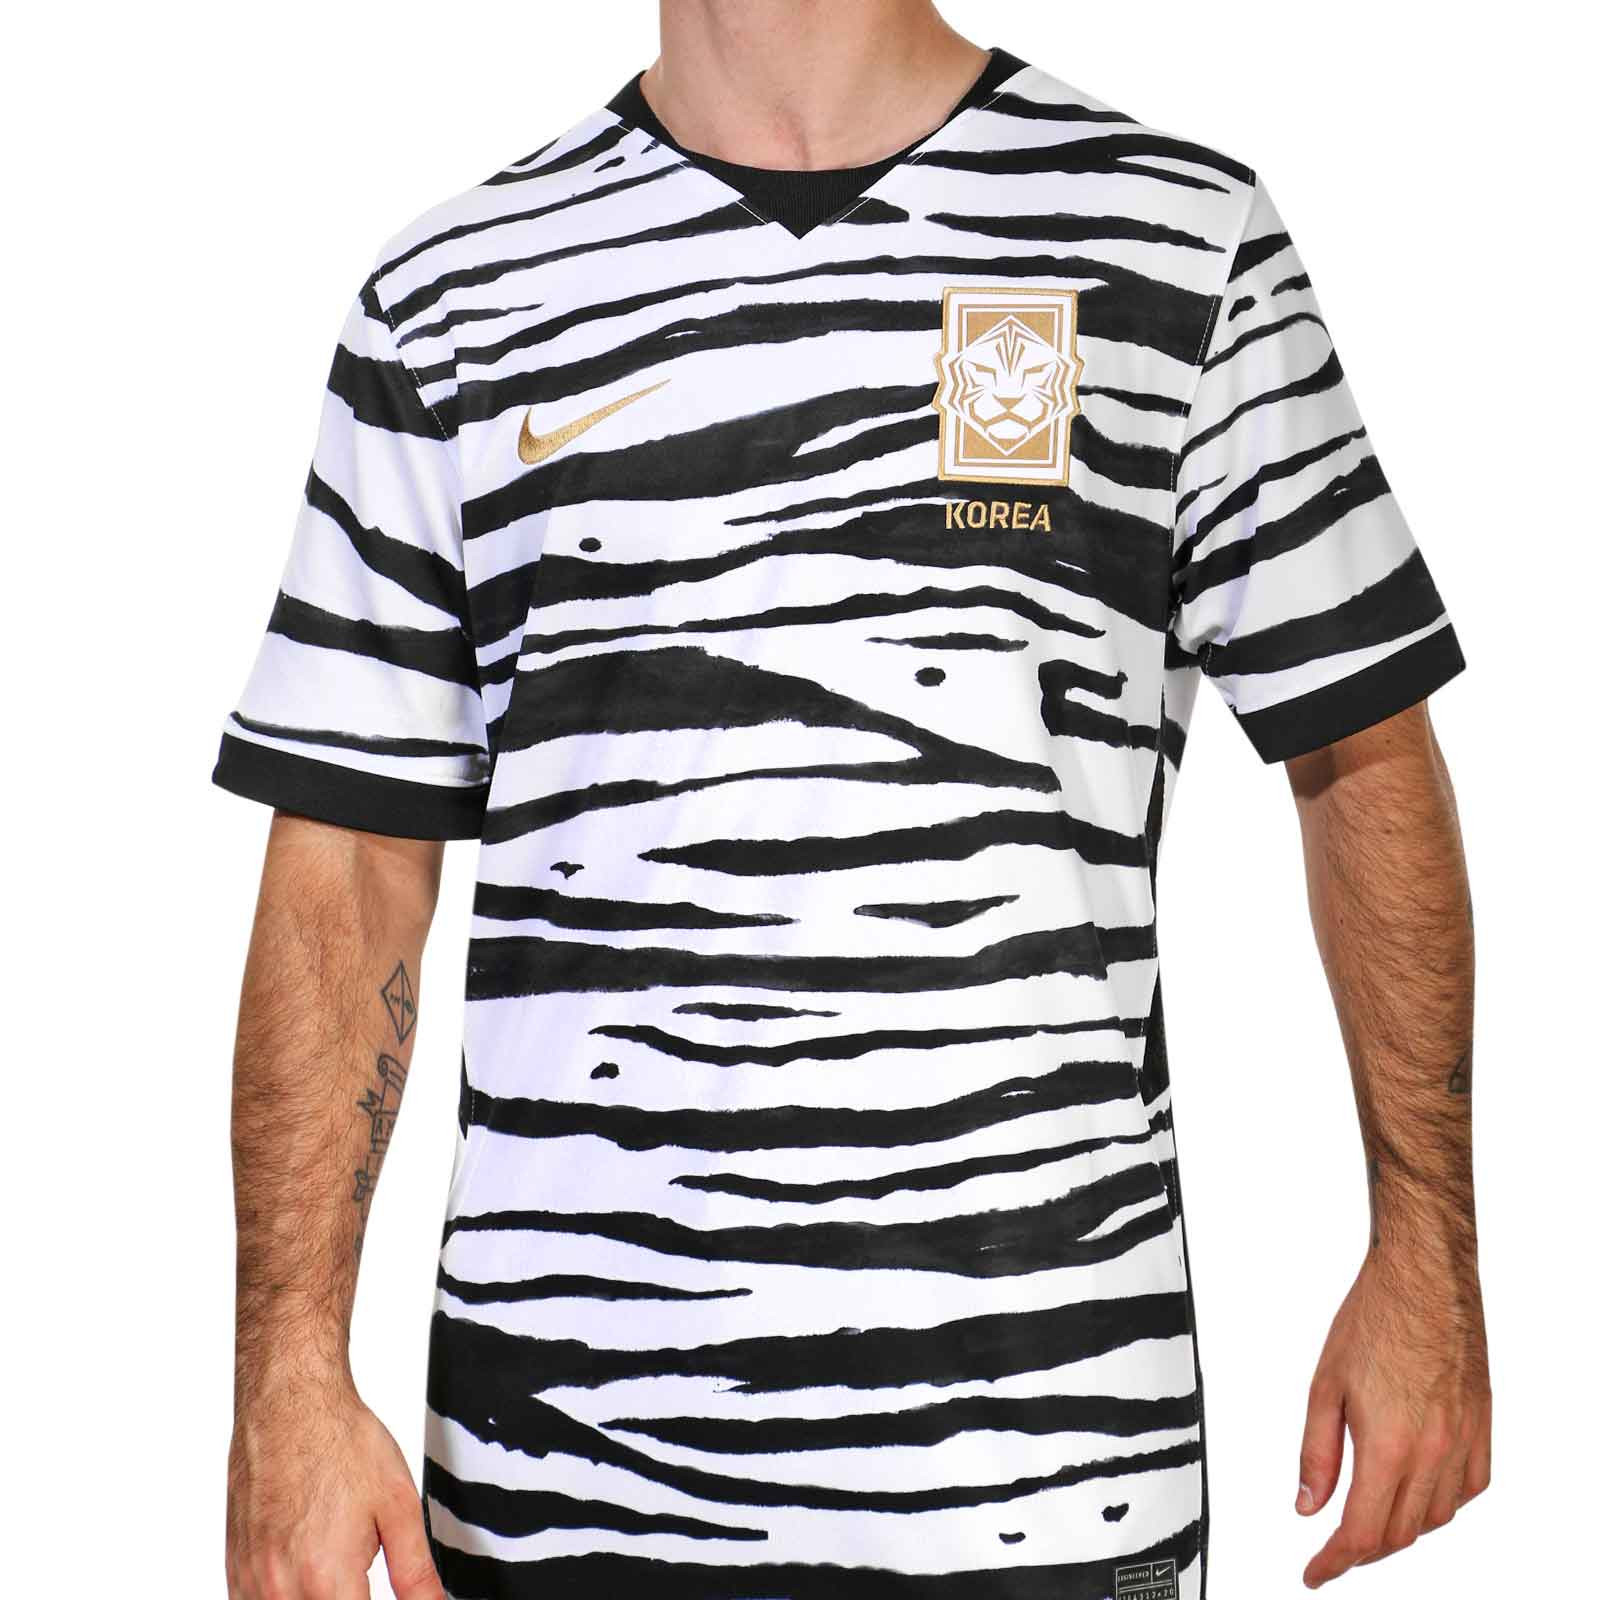 Camiseta Nike 2a Stadium 2020 20201 blanca negra |